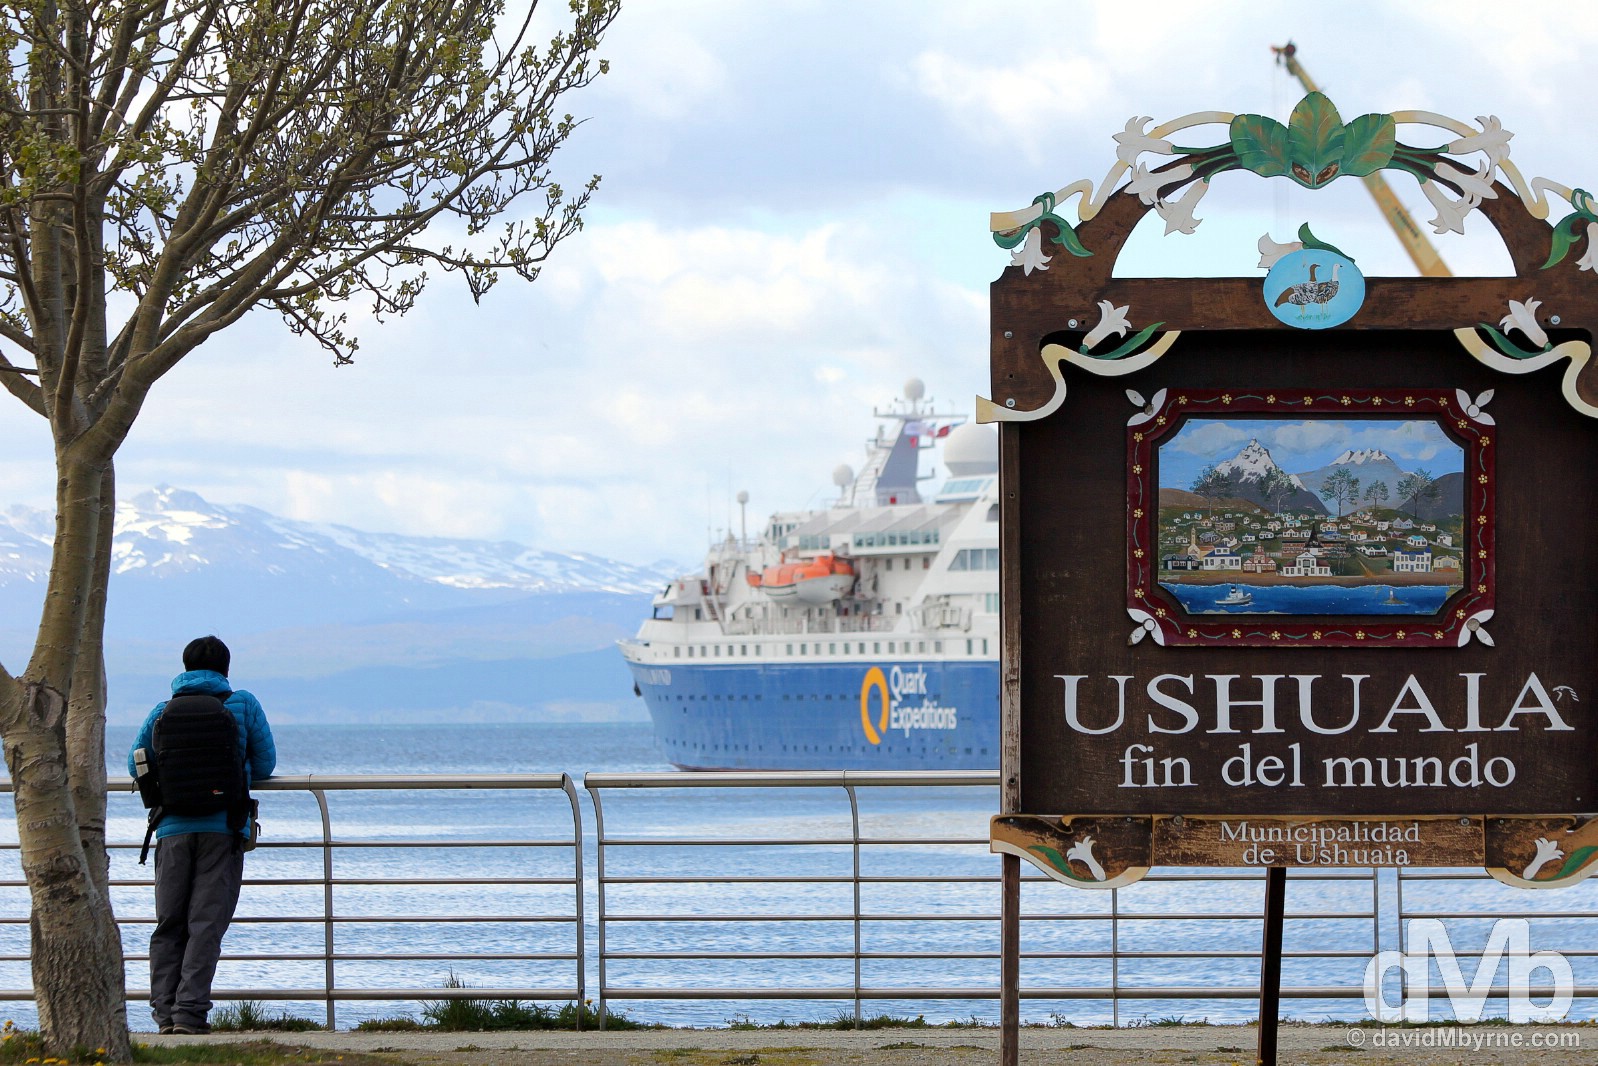 Ushuaia, Fin del Mundo (the End of the World), Tierra del Fuego, Argentina. November 15, 2015.